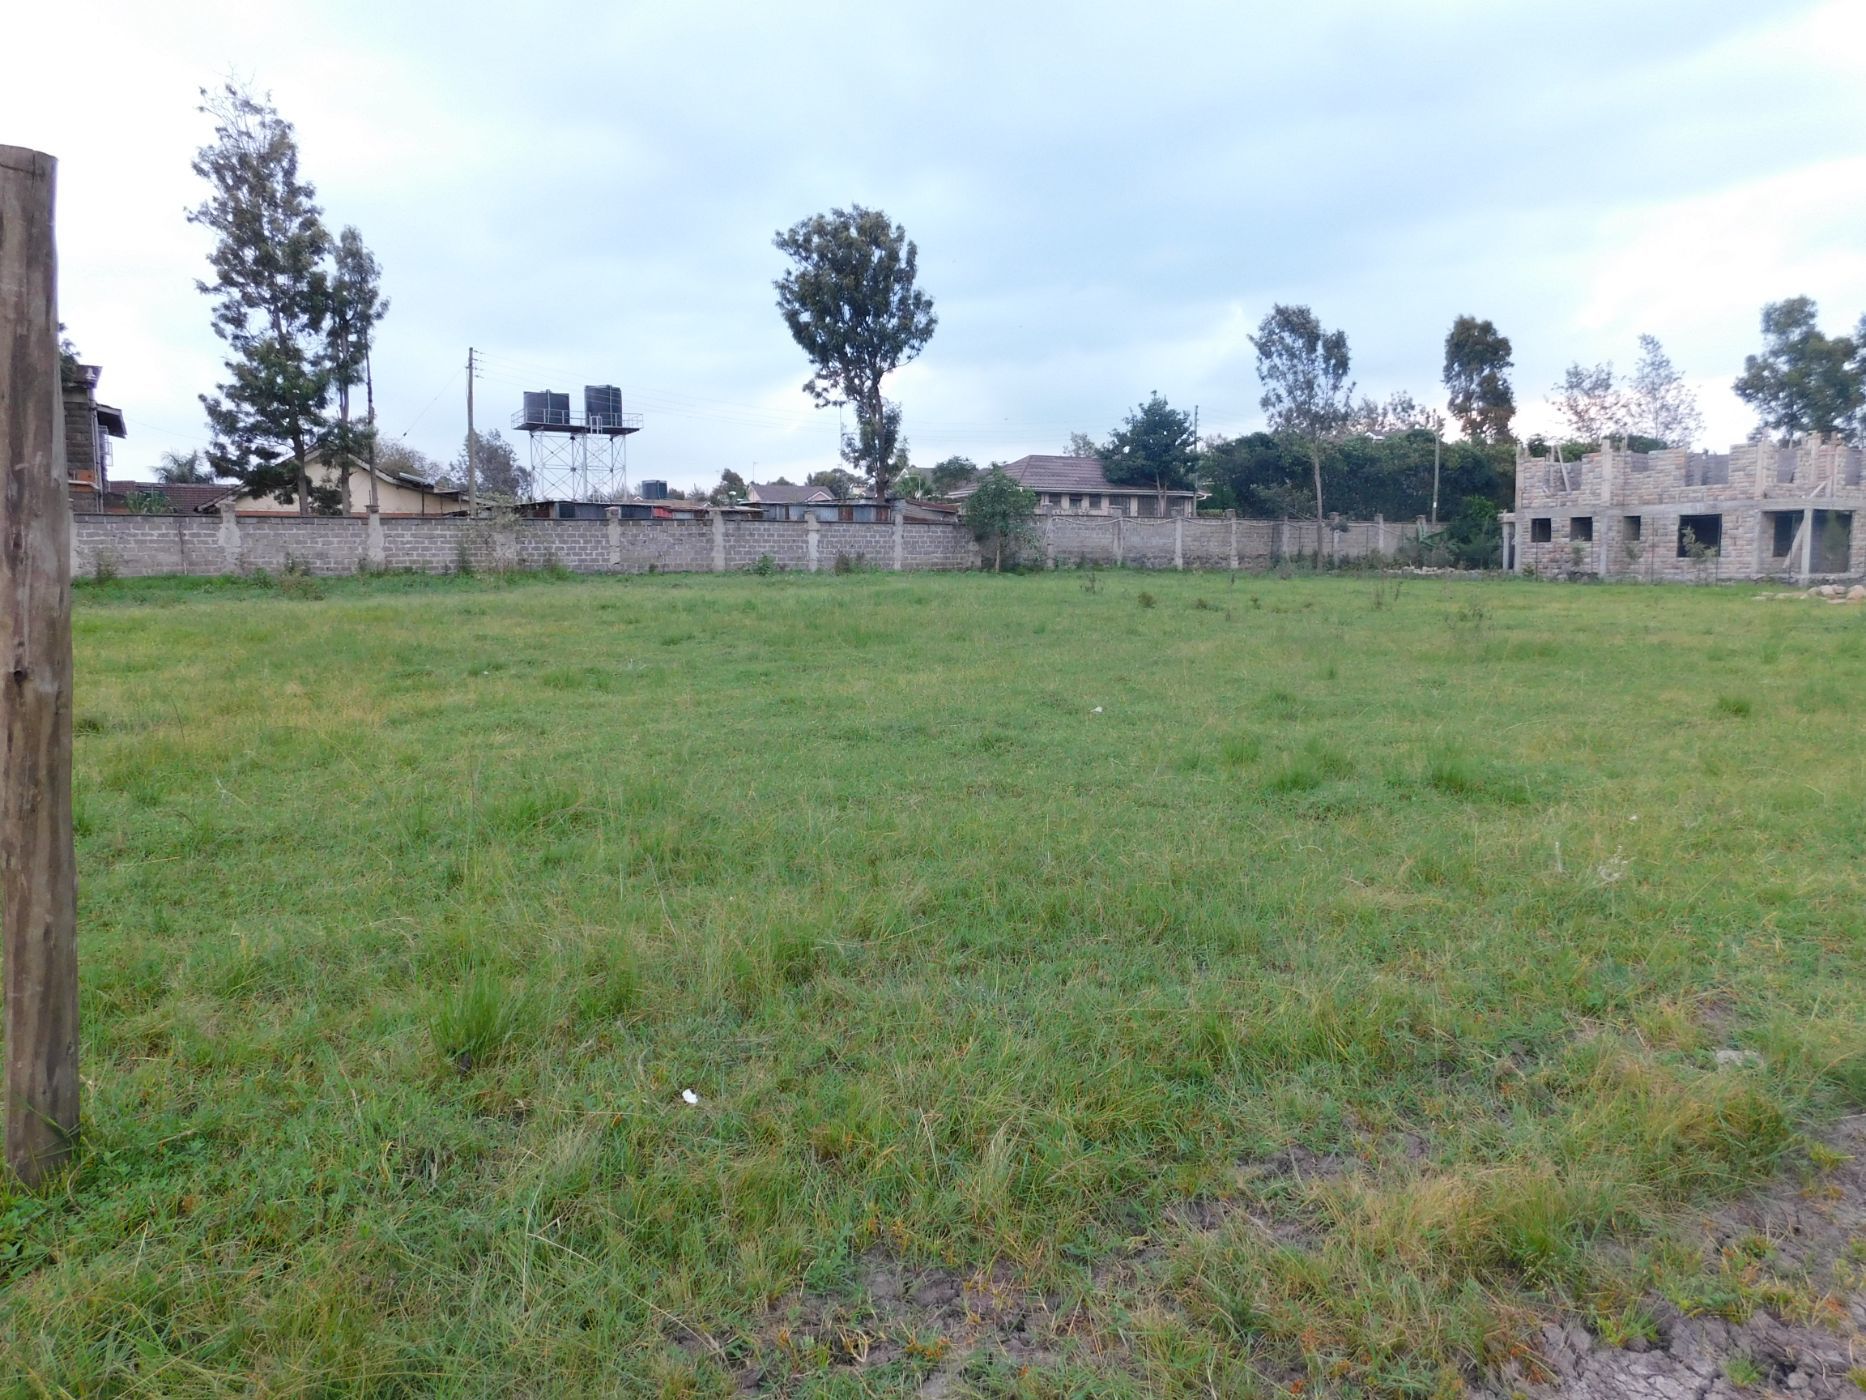 0.5 acres residential vacant land for sale in Karen (Kenya)